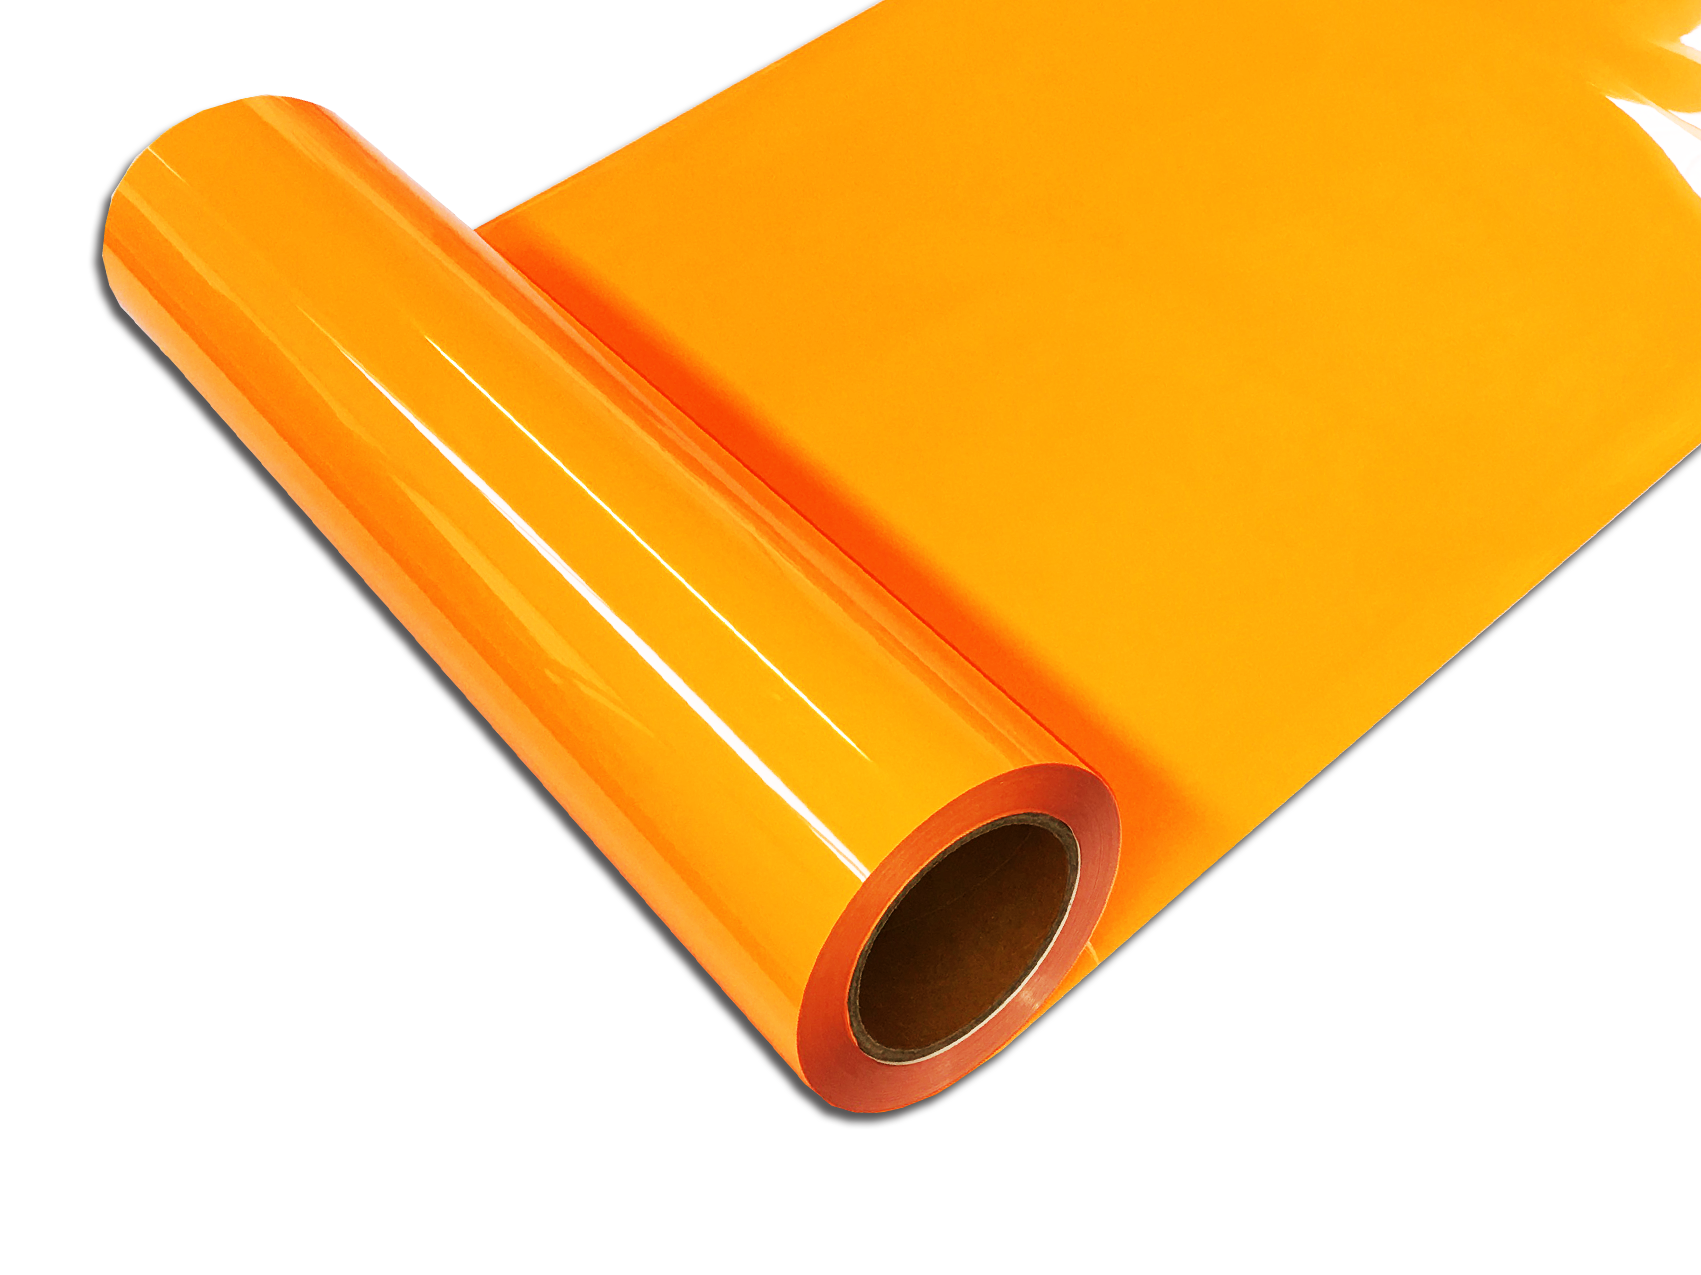 Orange 415 Poli Flex HTV Iron-on – Vinyl Supplies